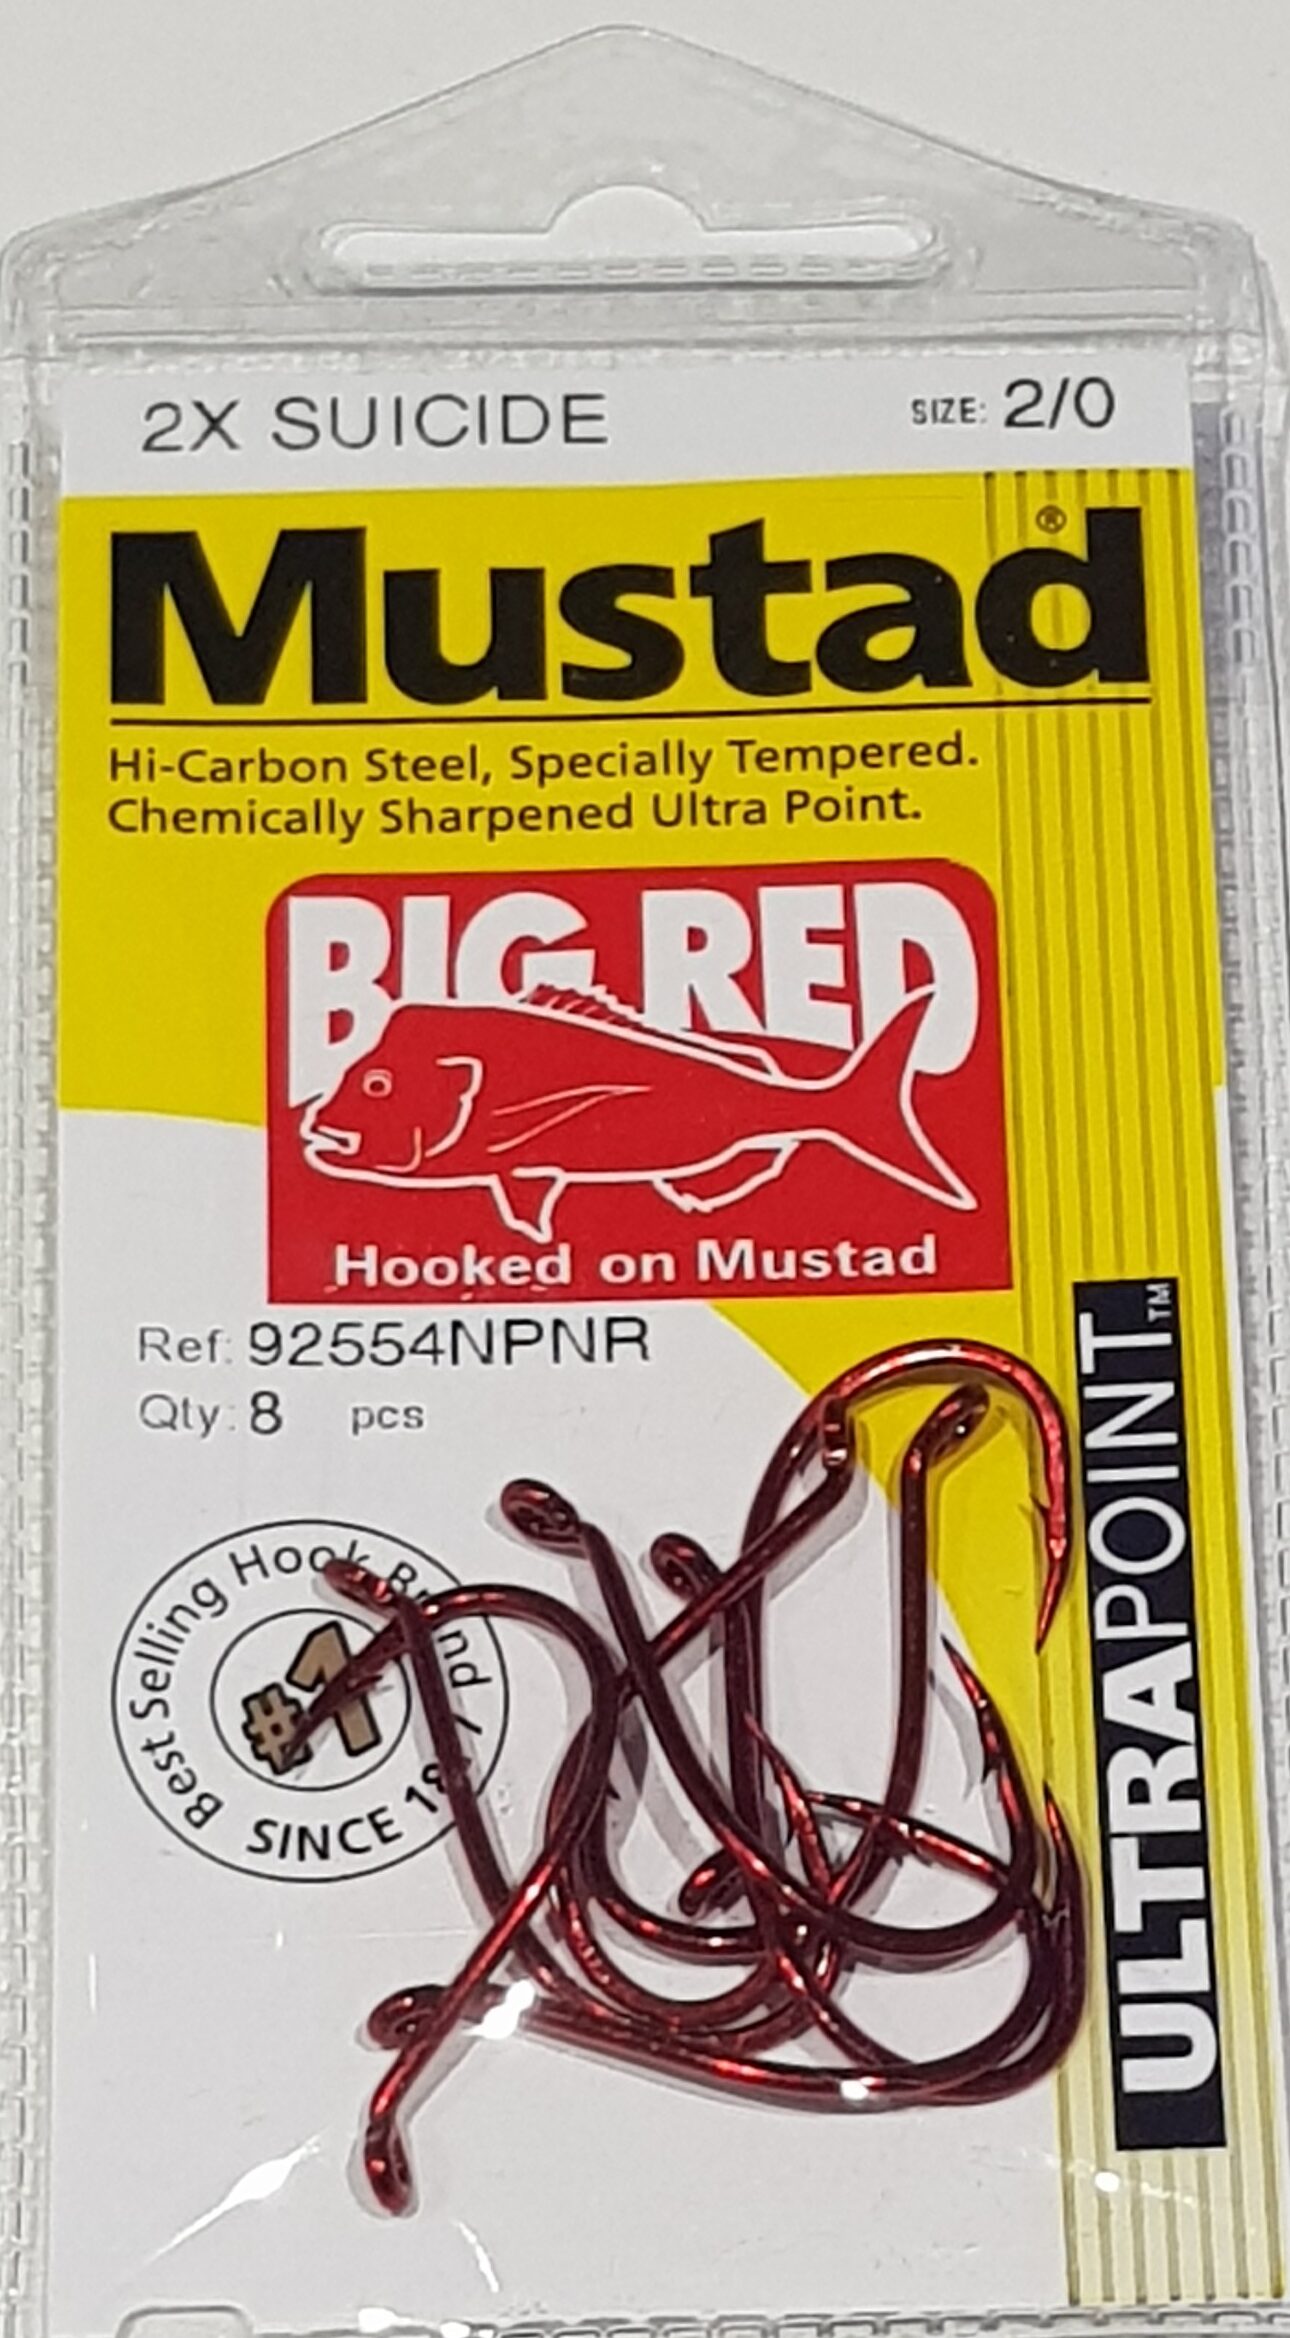 Mustad Big Red Suicide Fishing Hooks 2/0